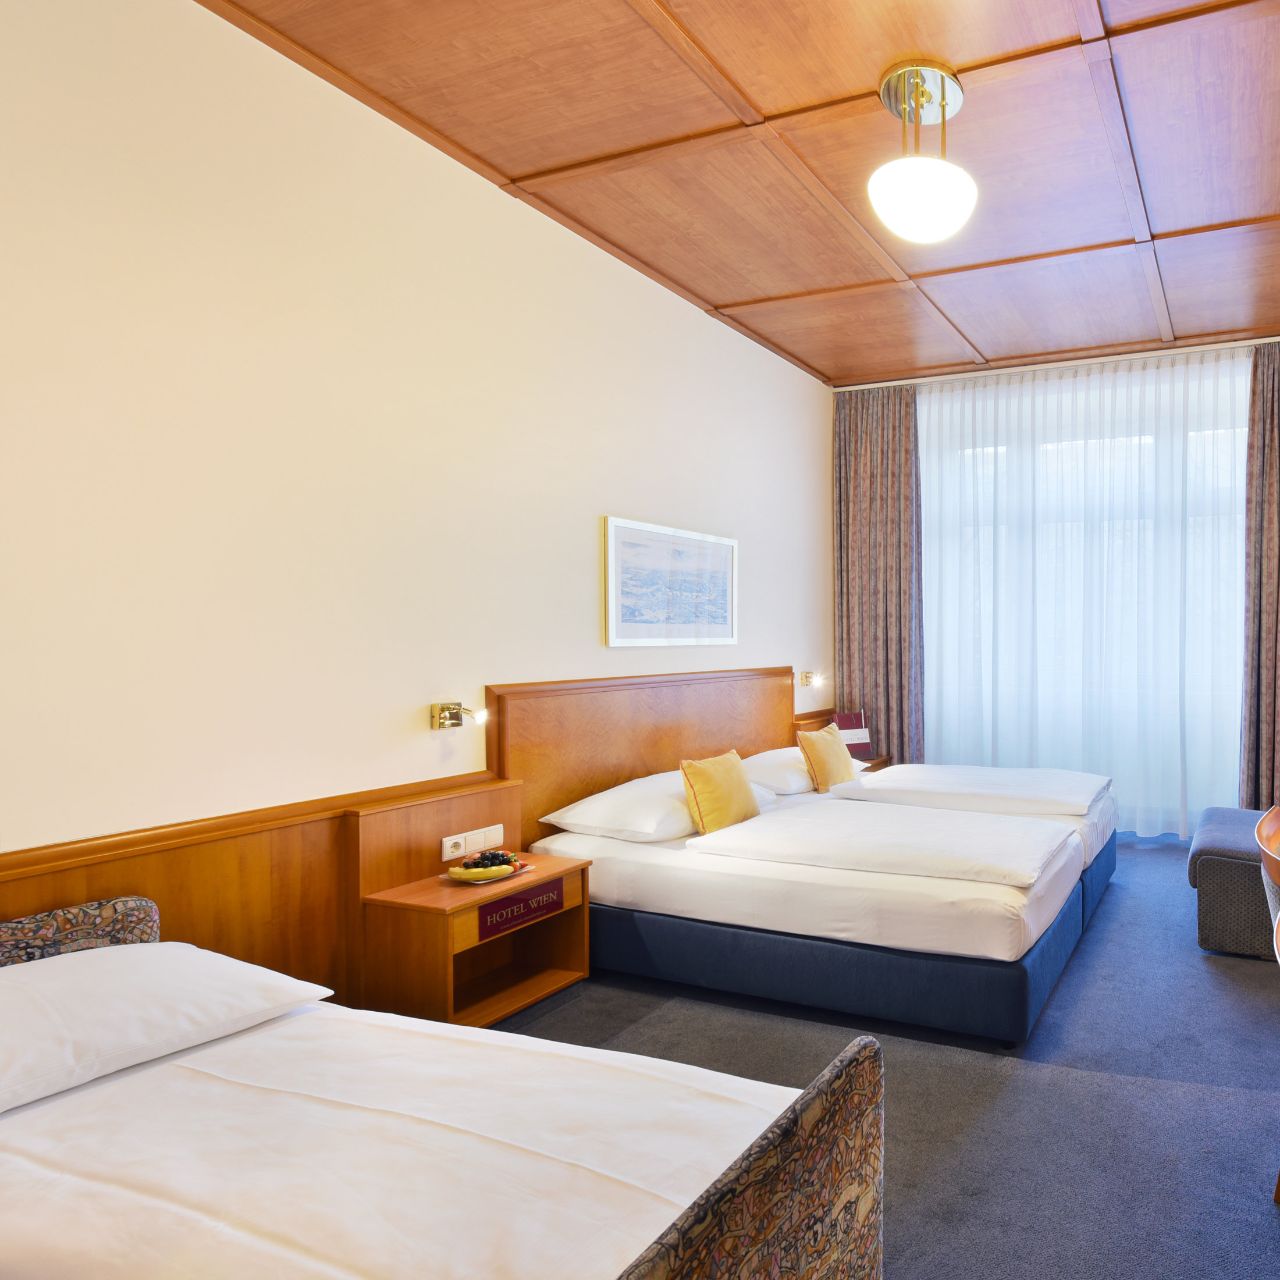 Hotel Austria Classic Wien - Vienna - Great prices at HOTEL INFO